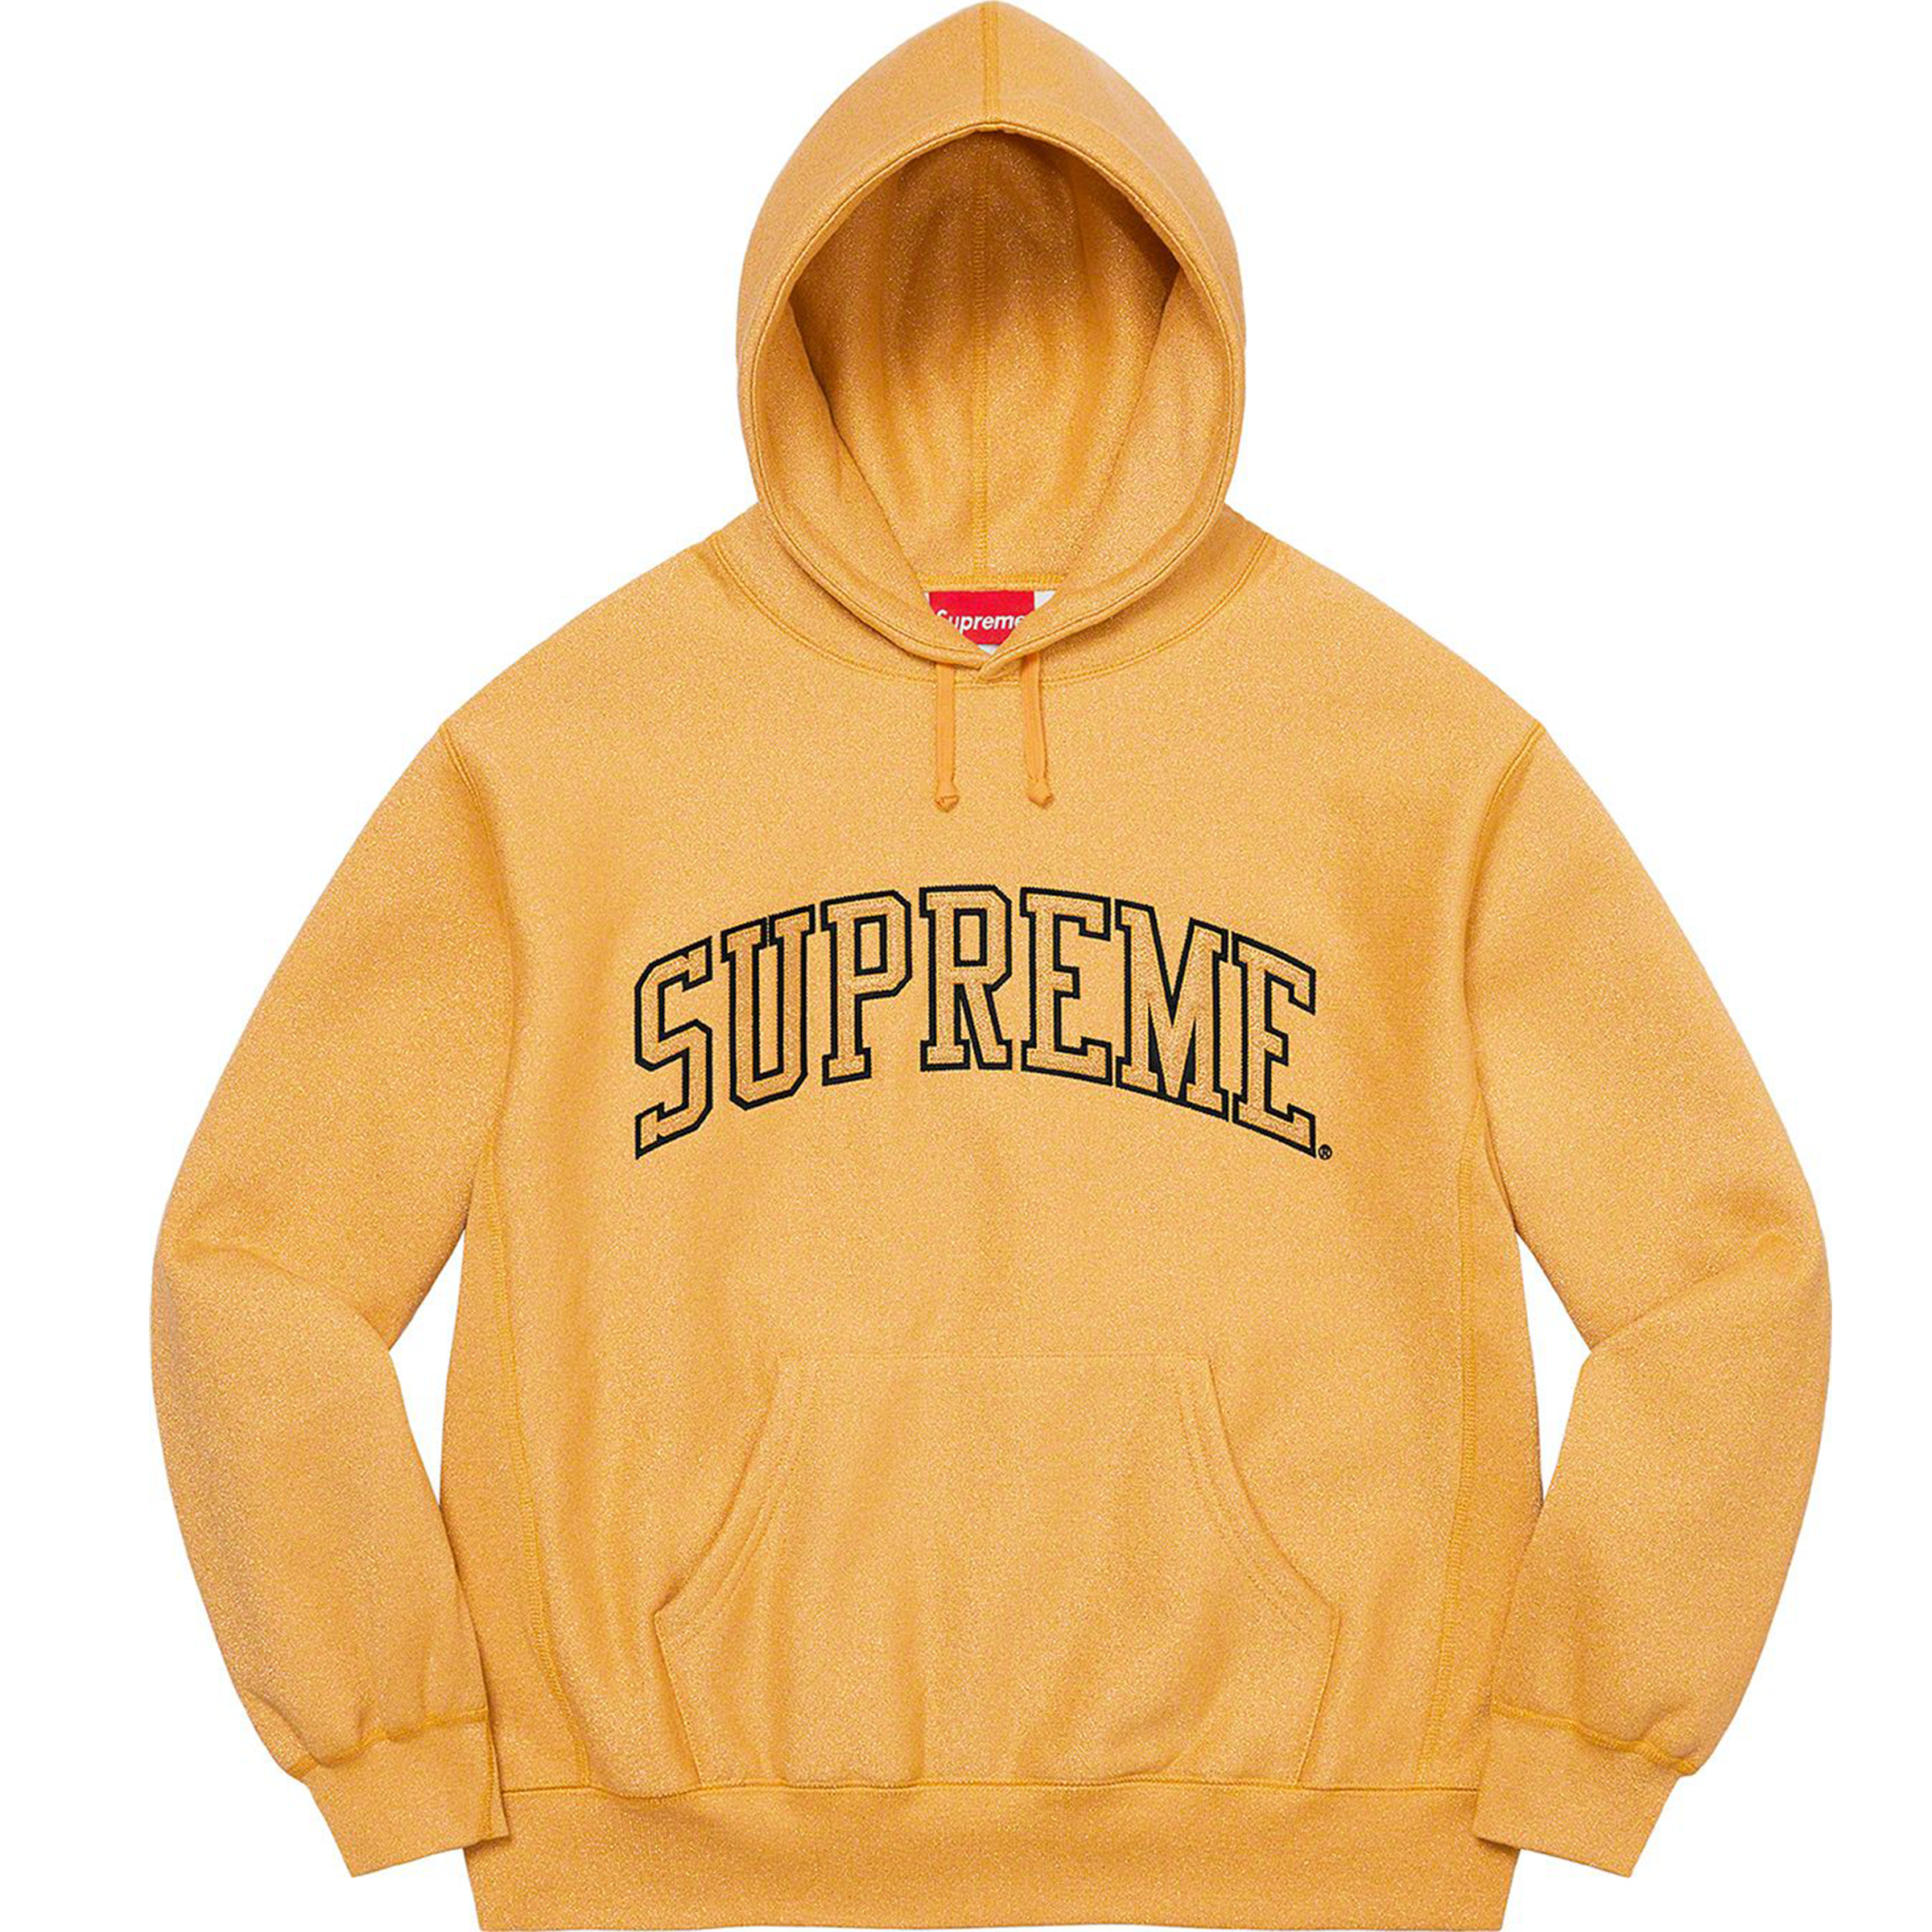 Supreme "Glitter Arc" - Hooded Sweatshirt